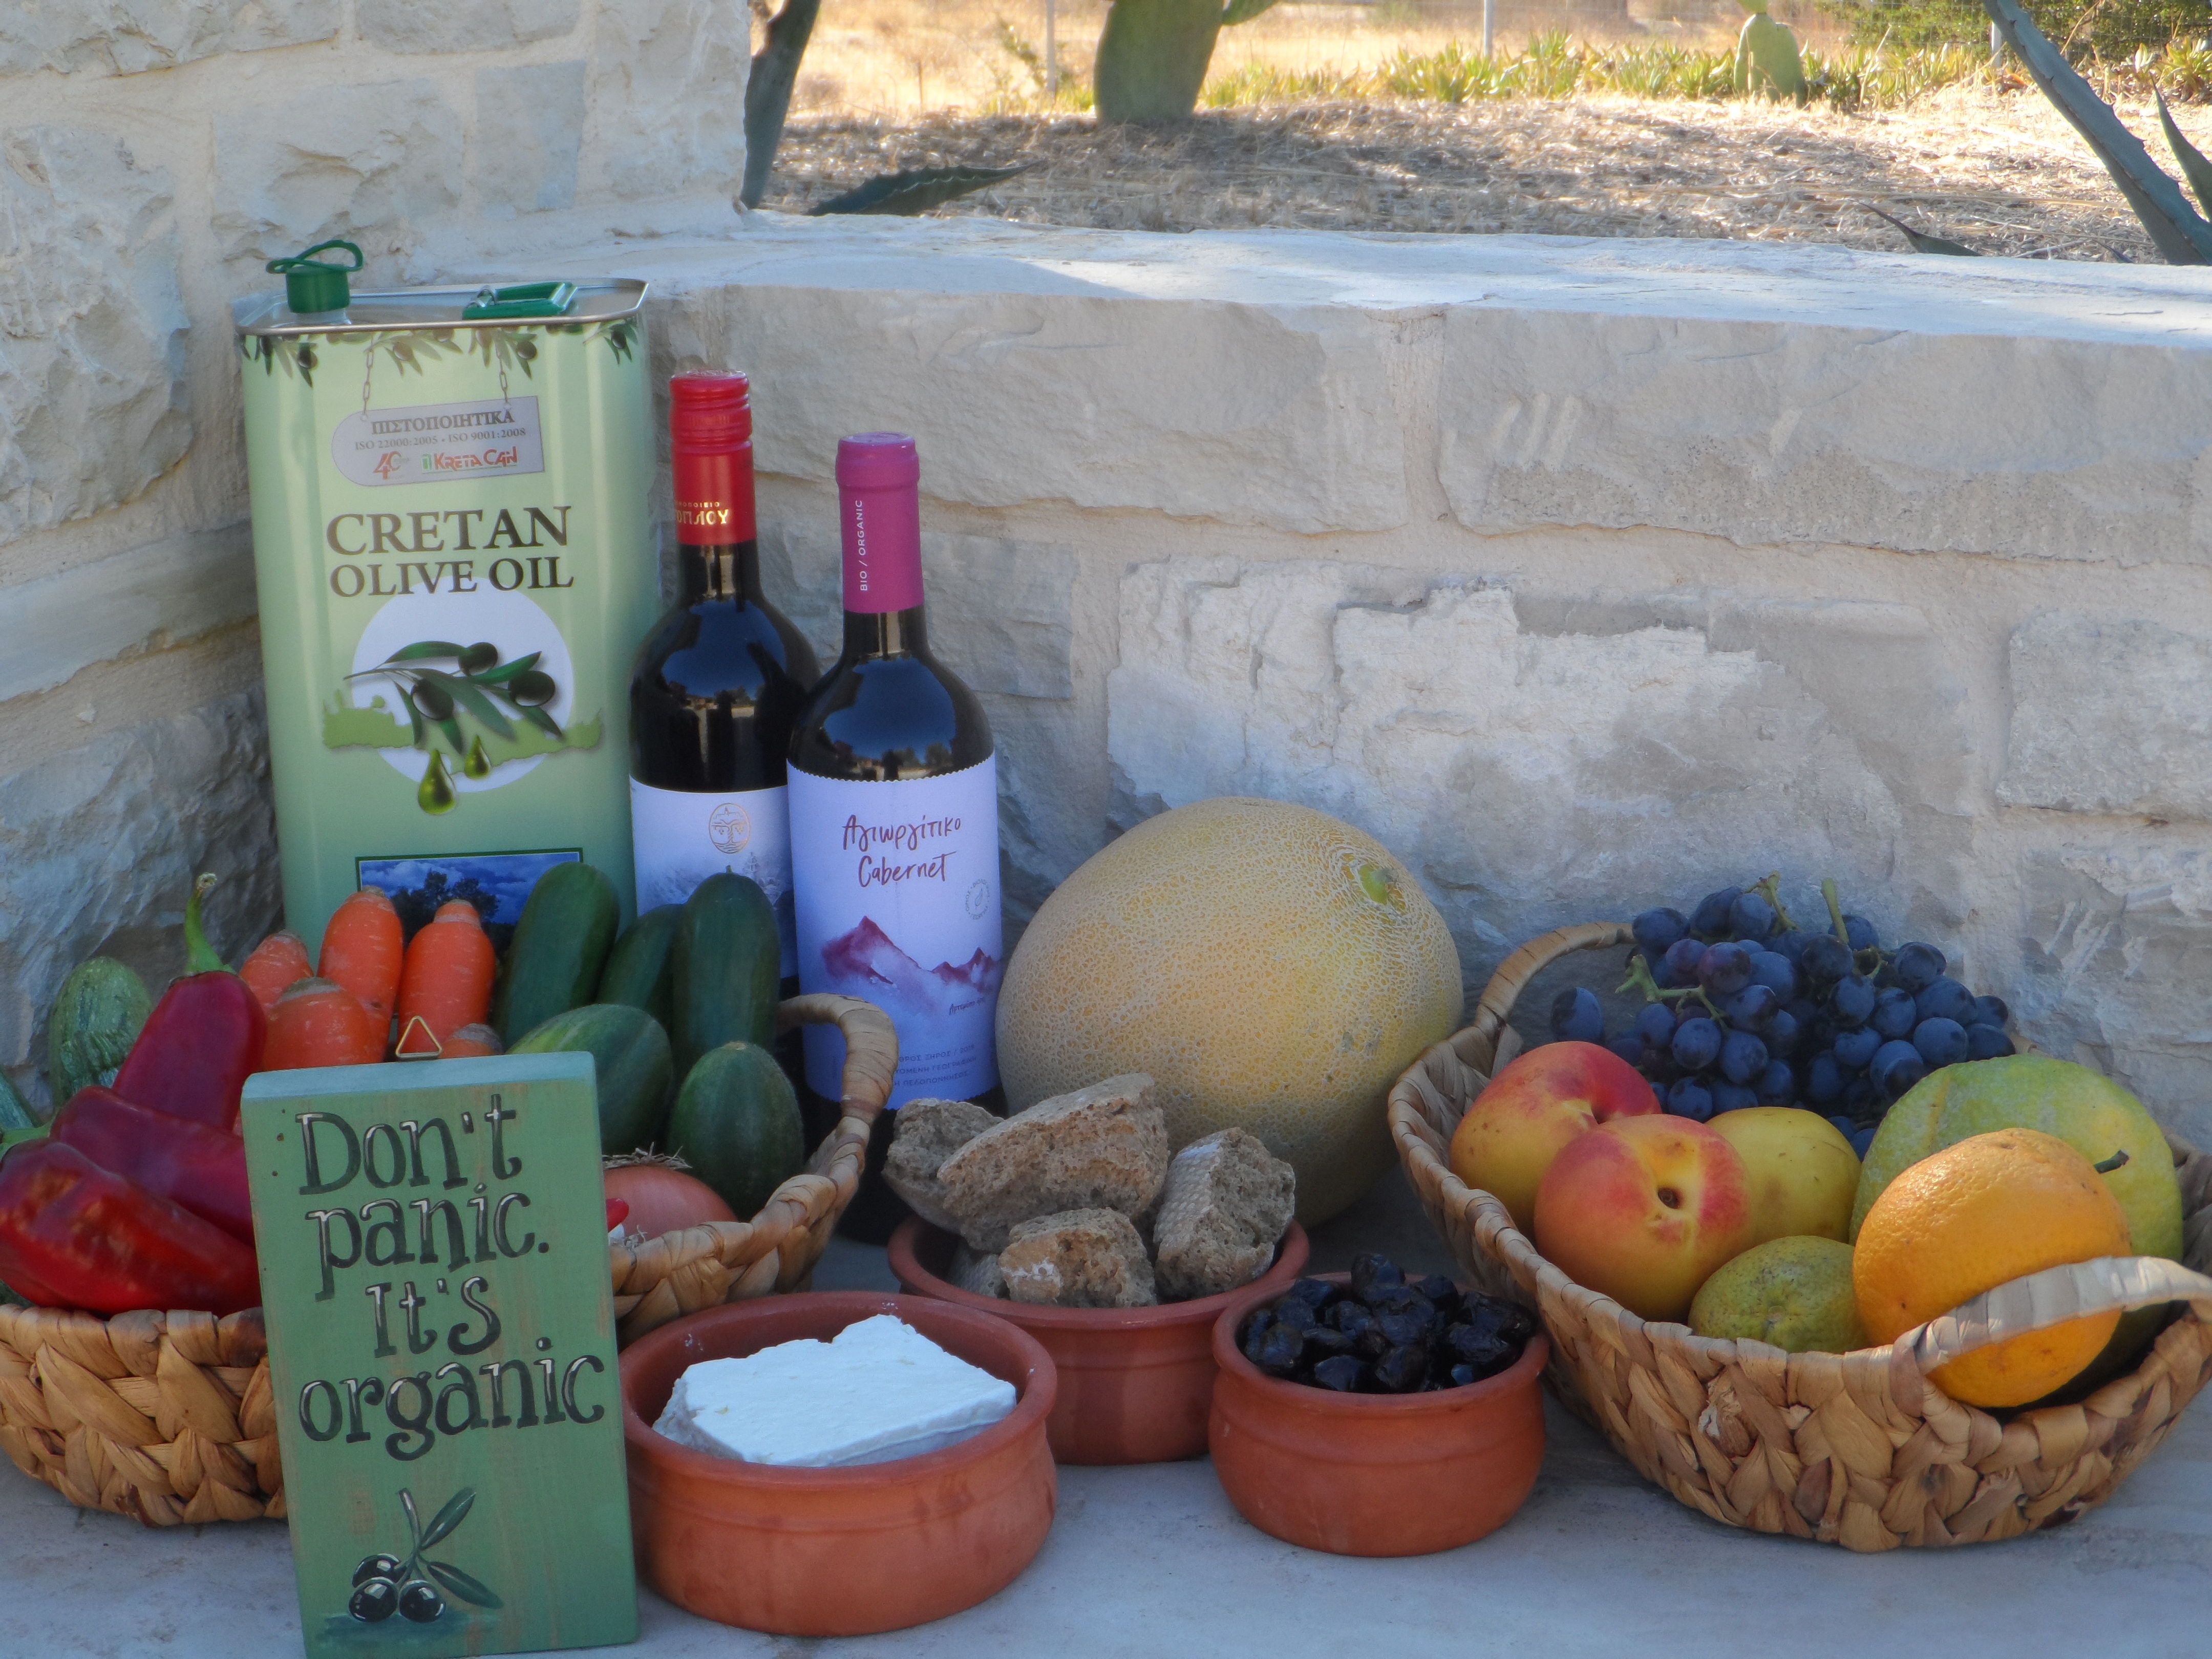 Organic food purchased in Crete for the Mediterranean diet study (credit Carlo Leifert).